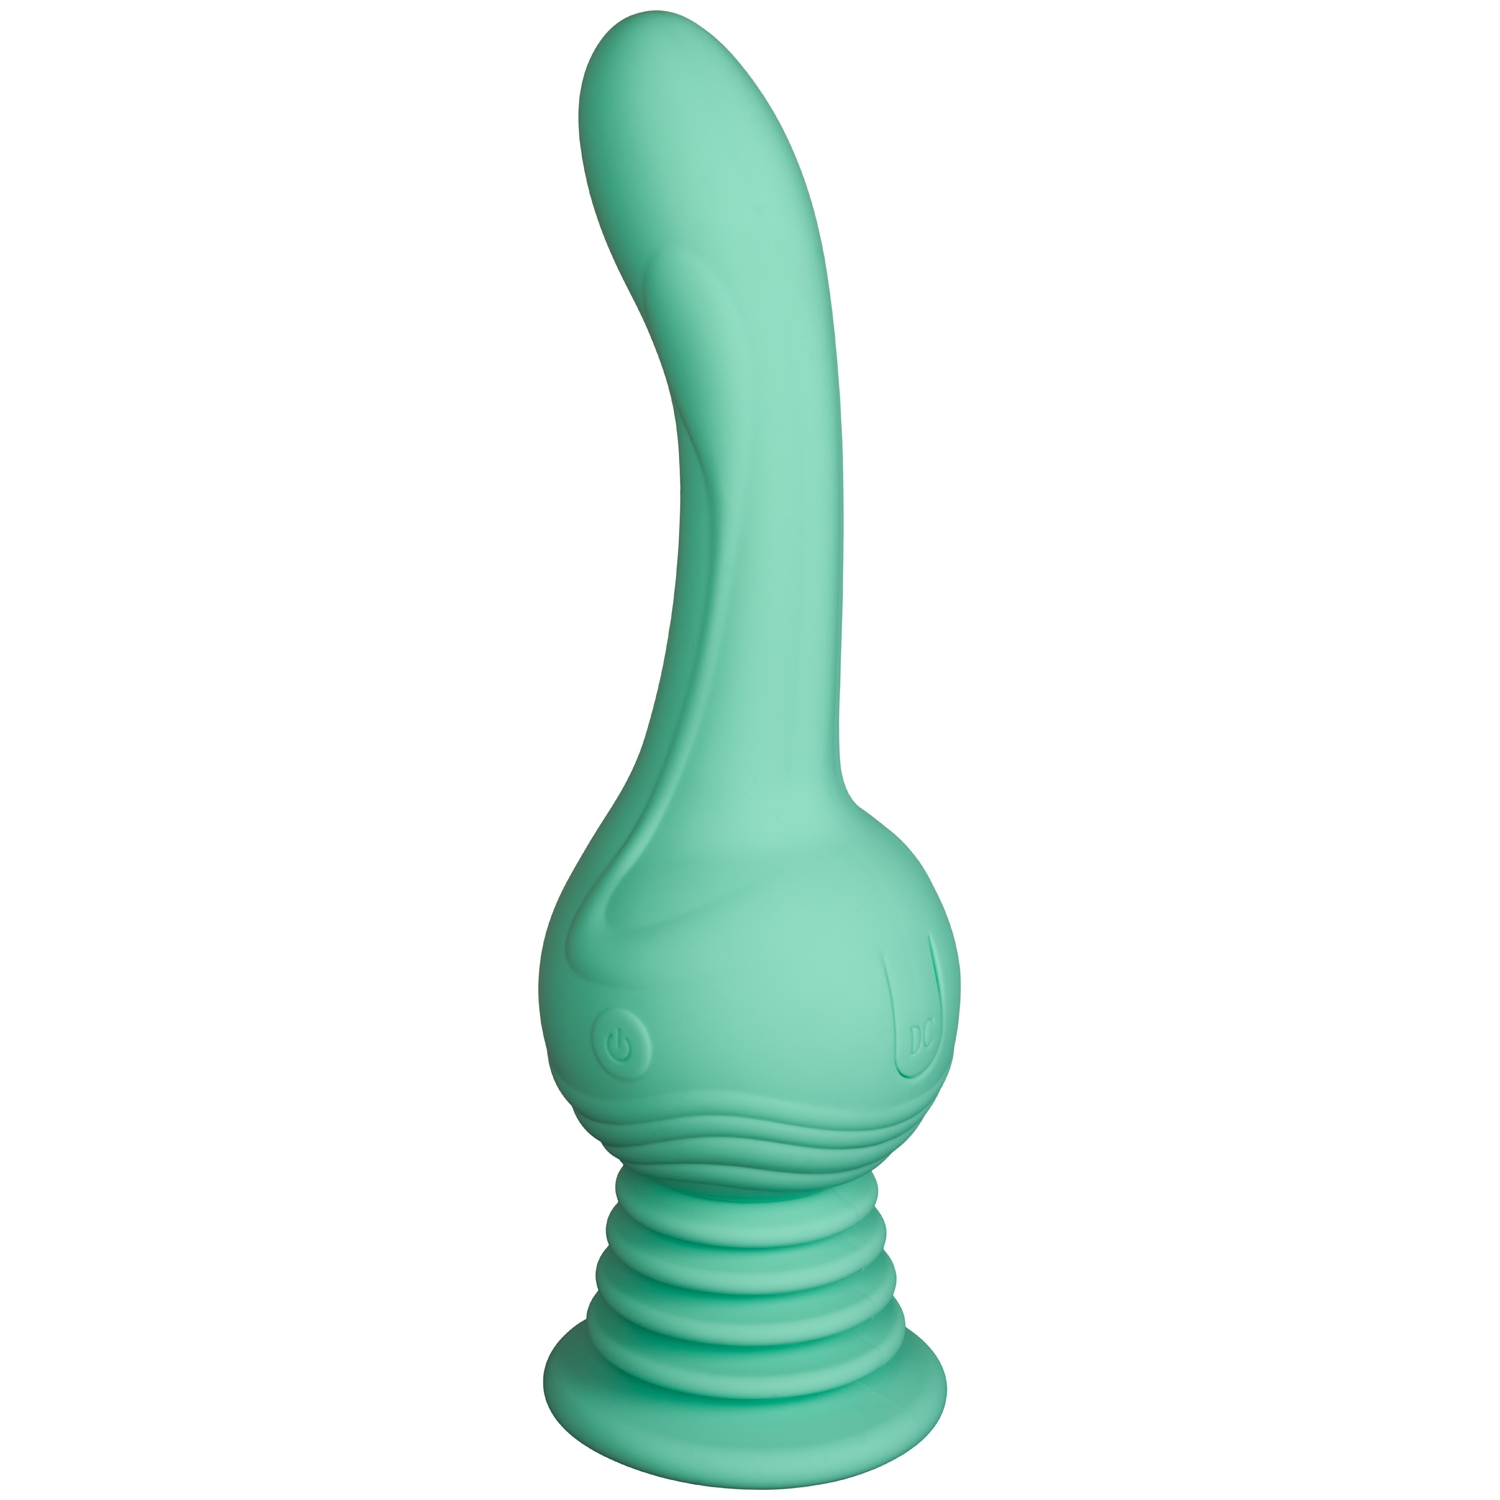 Tracy&apos;s Dog Centrifugal Vaginal Vibrator - Turquoise thumbnail